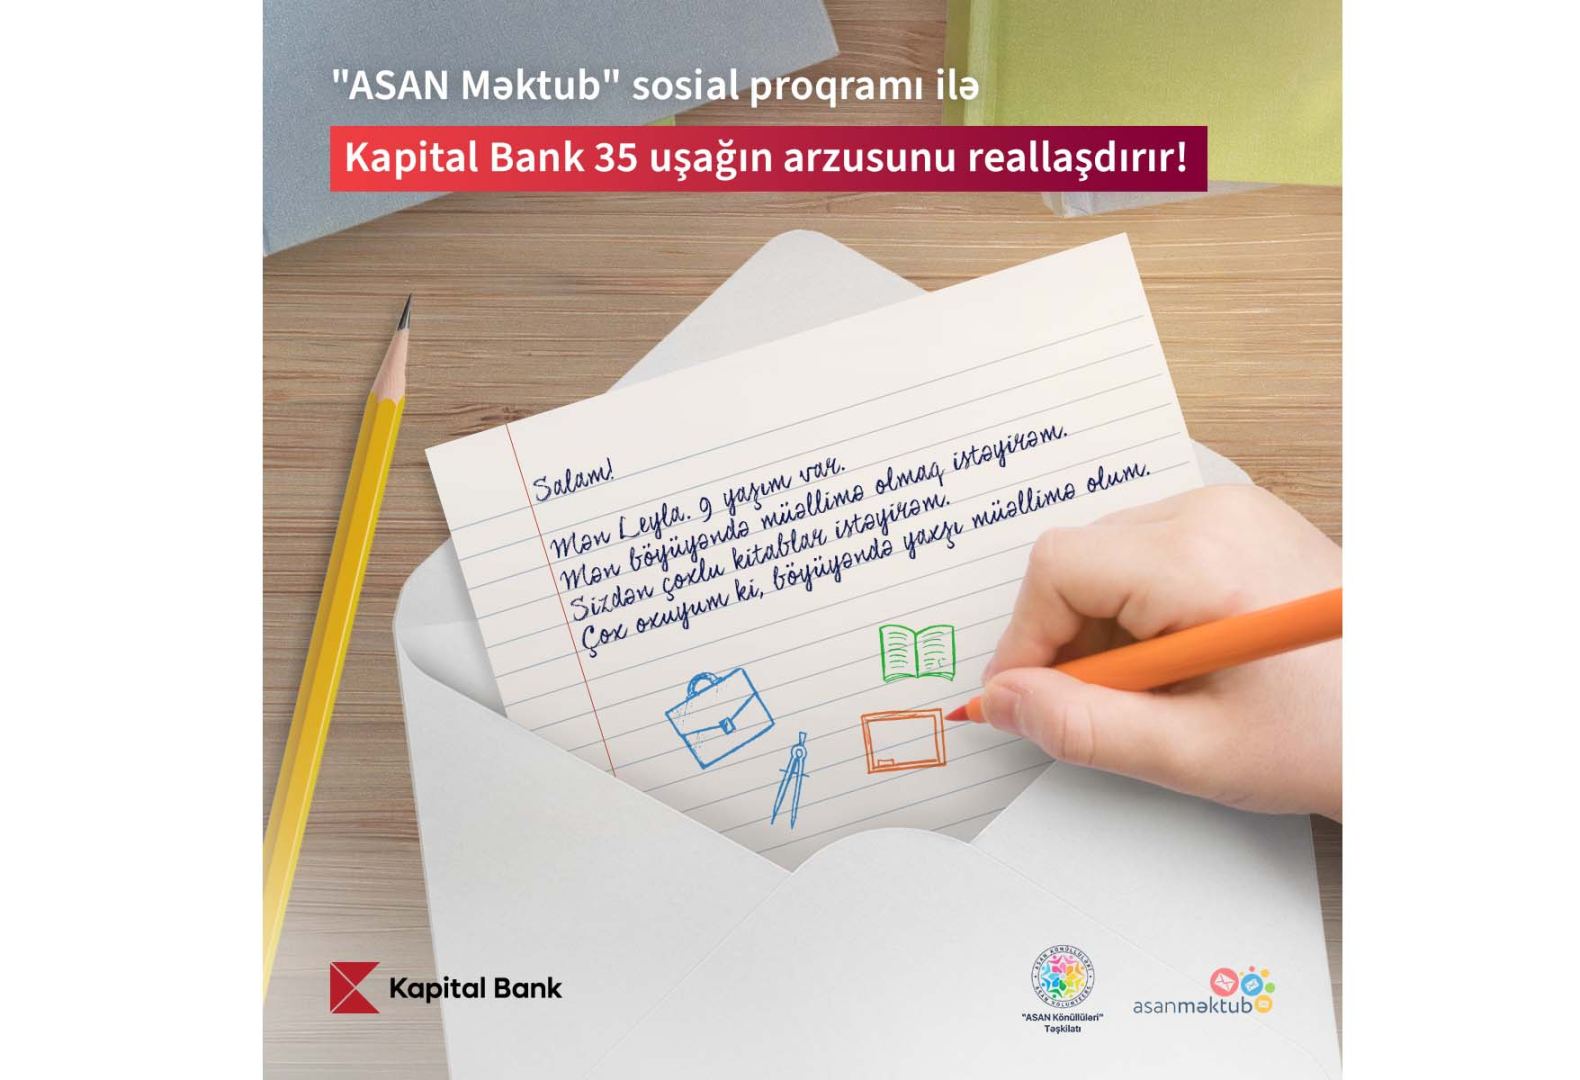 Kapital Bank and ASAN Məktub social program of ASAN Könüllüləri make children’s dreams come true